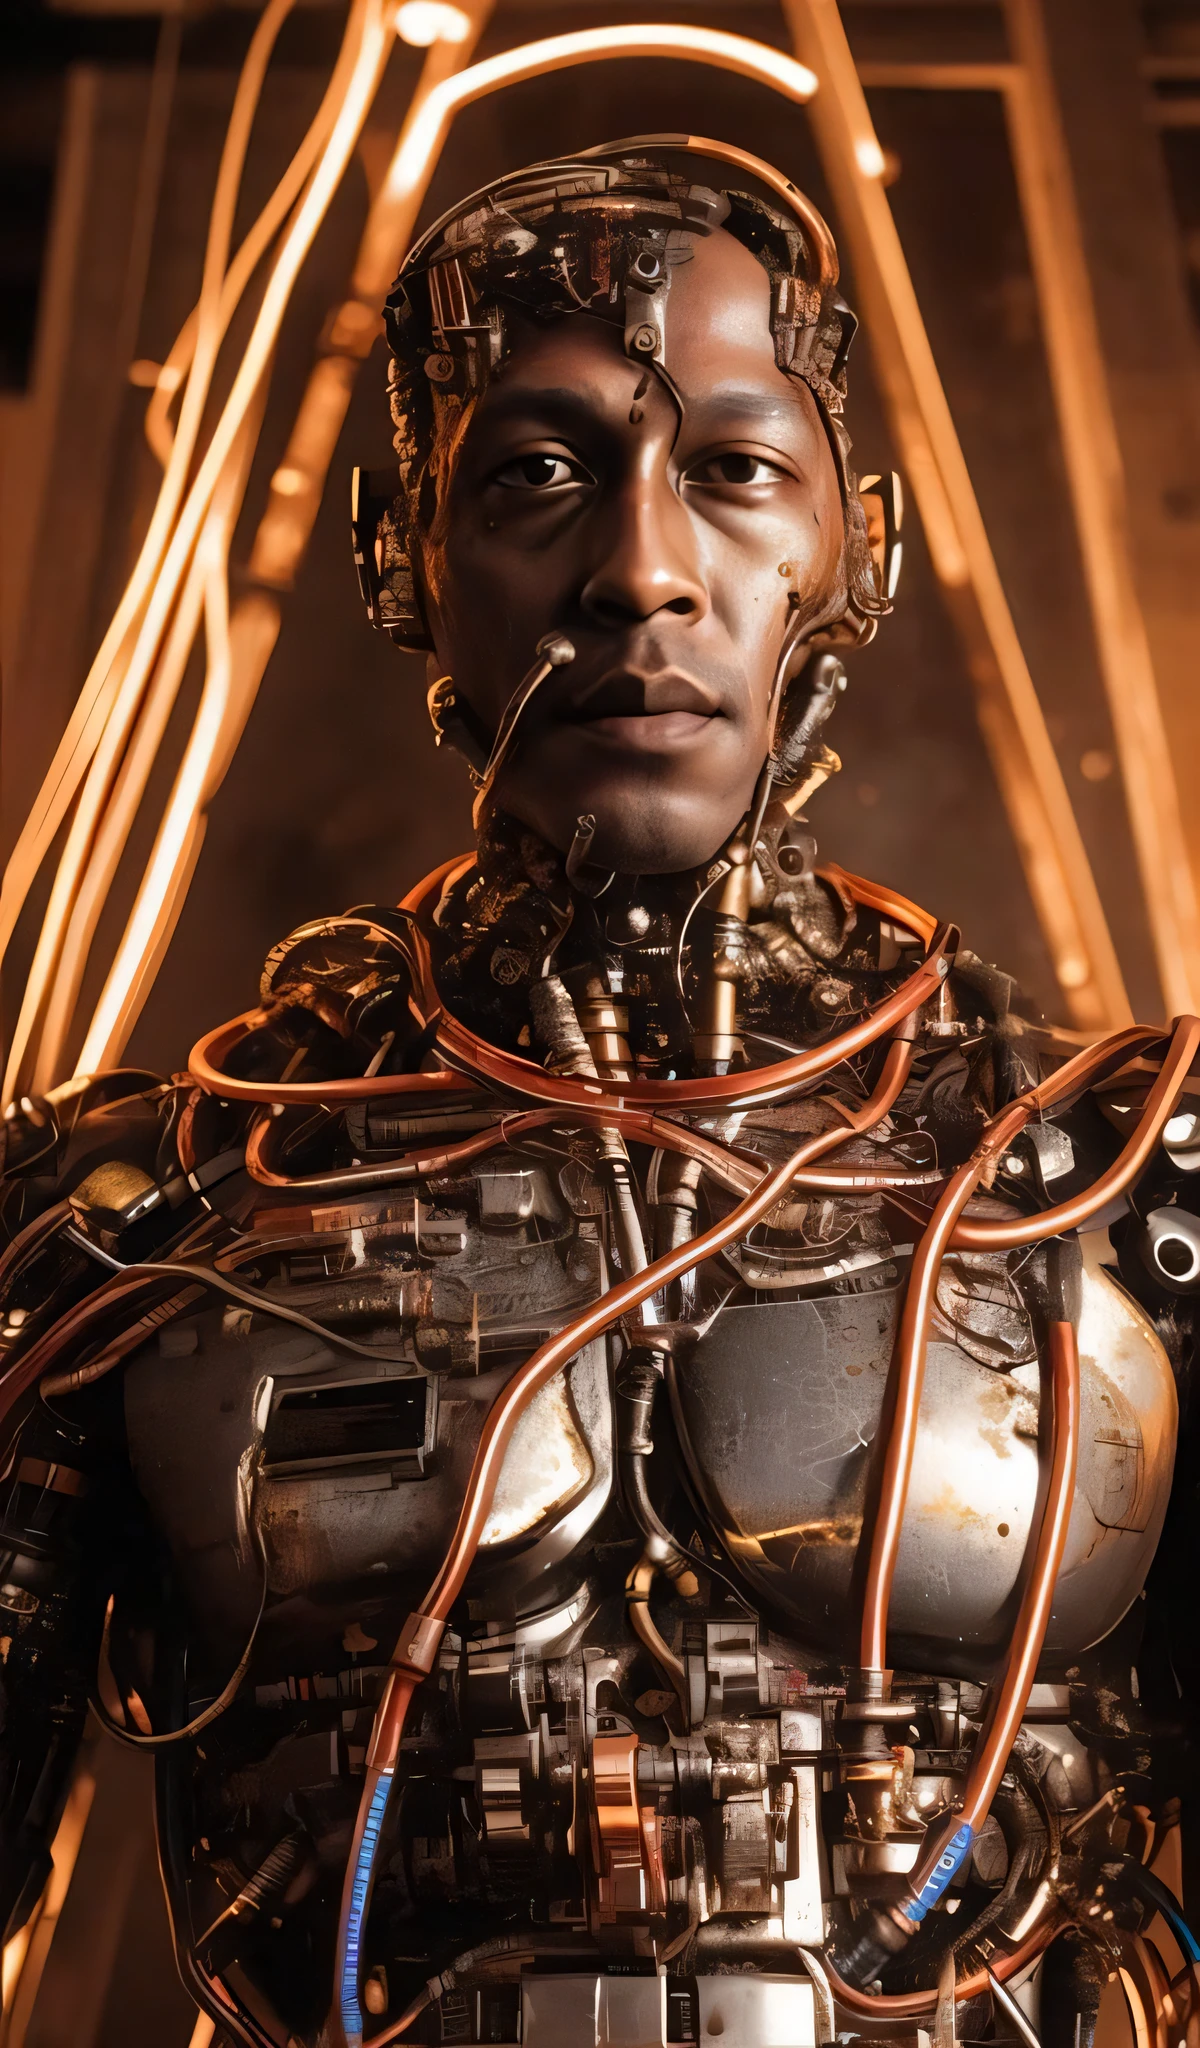 Cyborg-Mann-Porträt, Freiliegende Drähte, Goldöl tropft aus rostigen Drähten